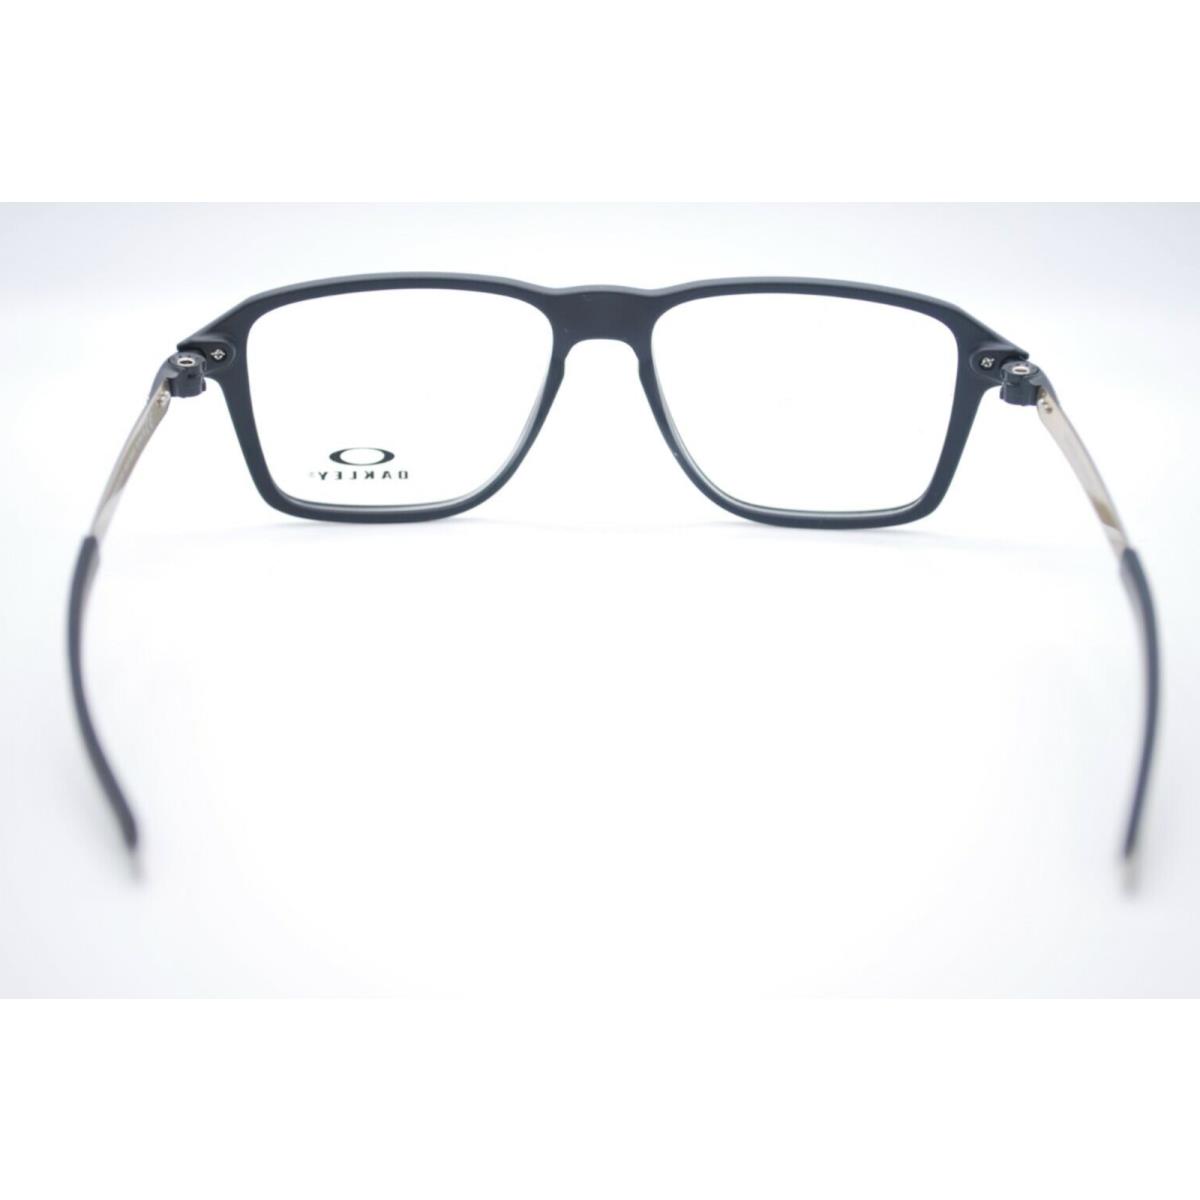 Oakley eyeglasses Wheel House - Matte Black w/ Black & Silver Temples Frame, Demos with imprint Lens 5